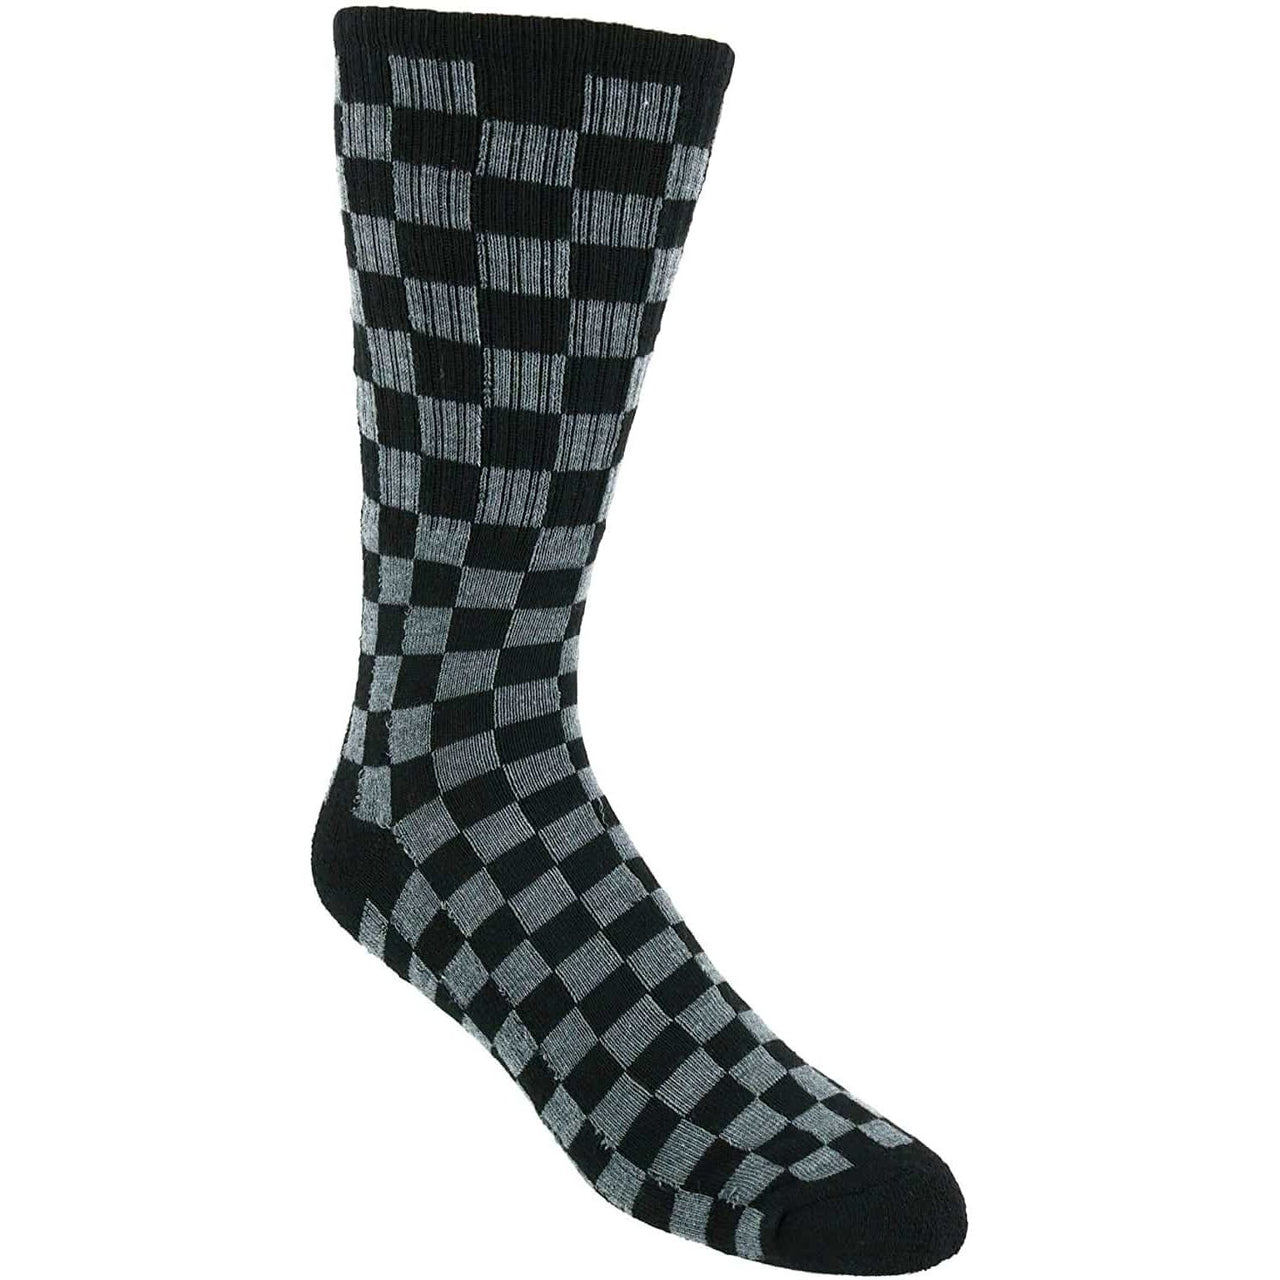 Black and Gray Checkered socks